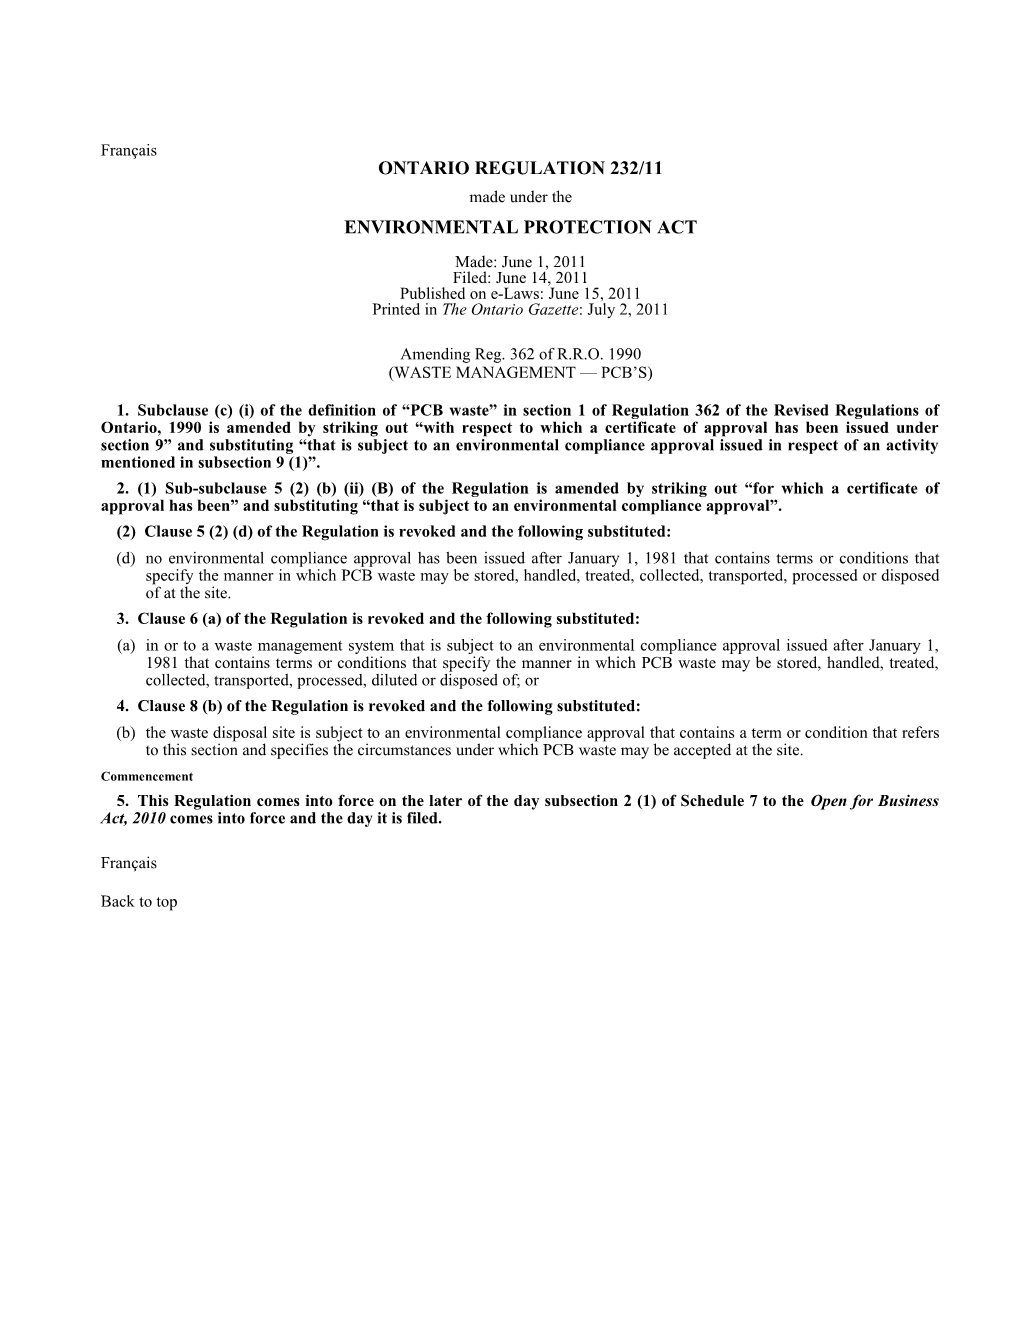 ENVIRONMENTAL PROTECTION ACT - O. Reg. 232/11